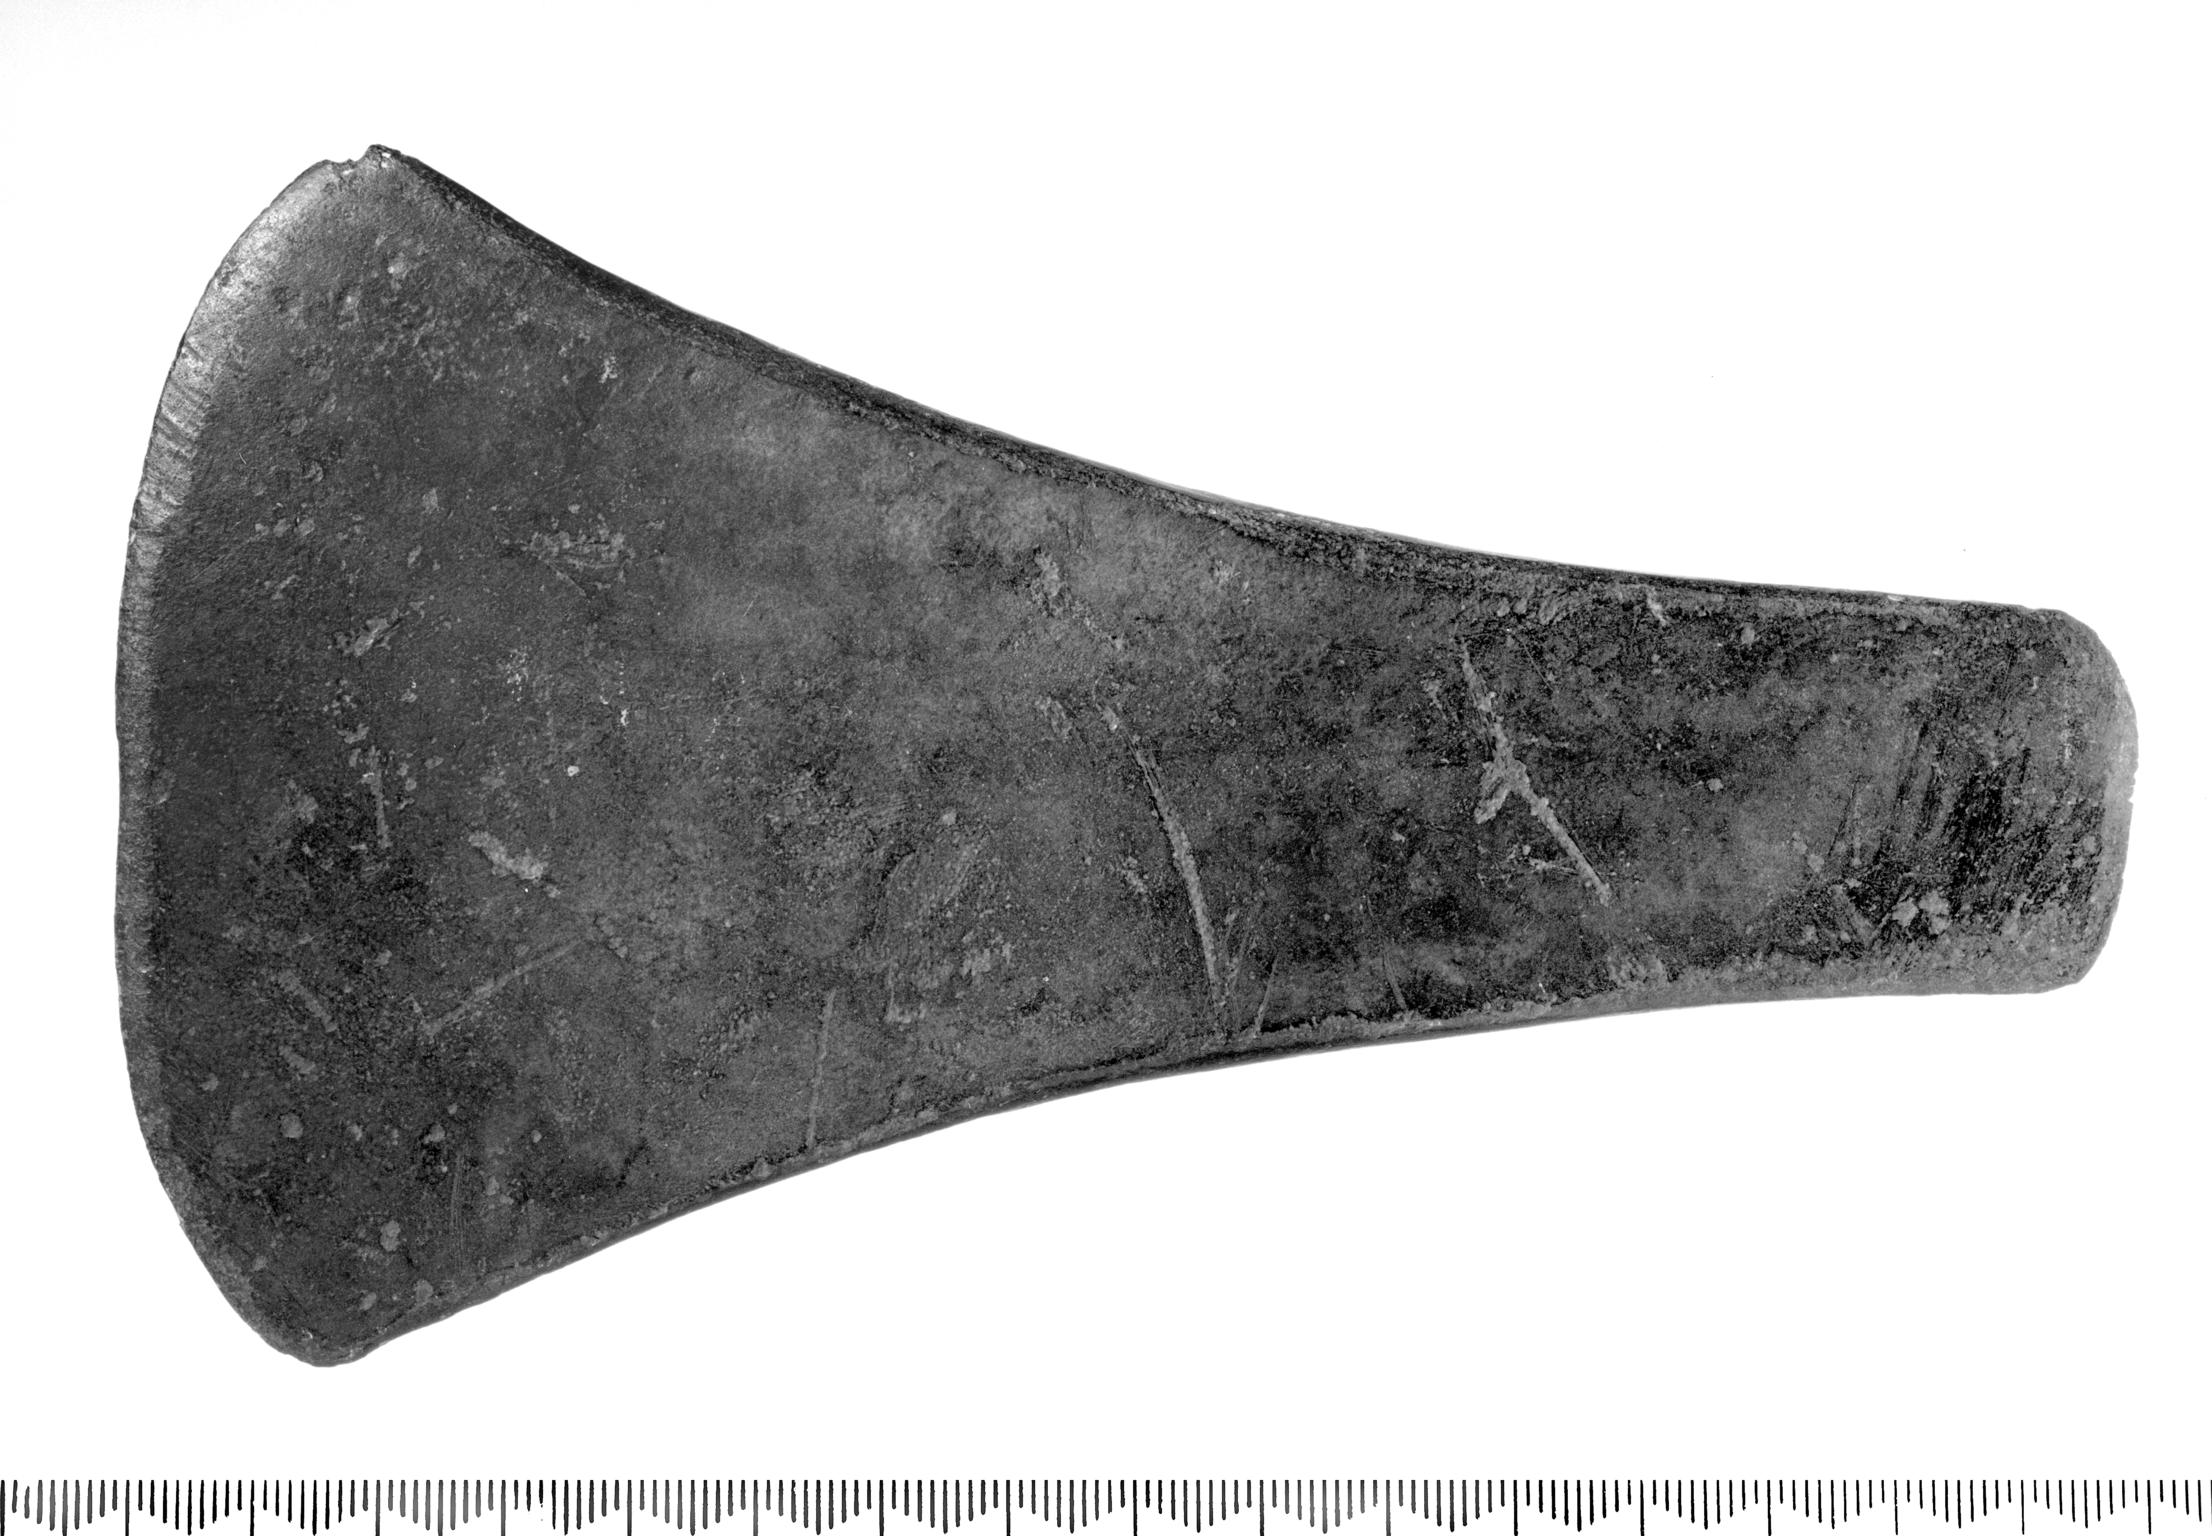 Early Bronze Age bronze flat axe